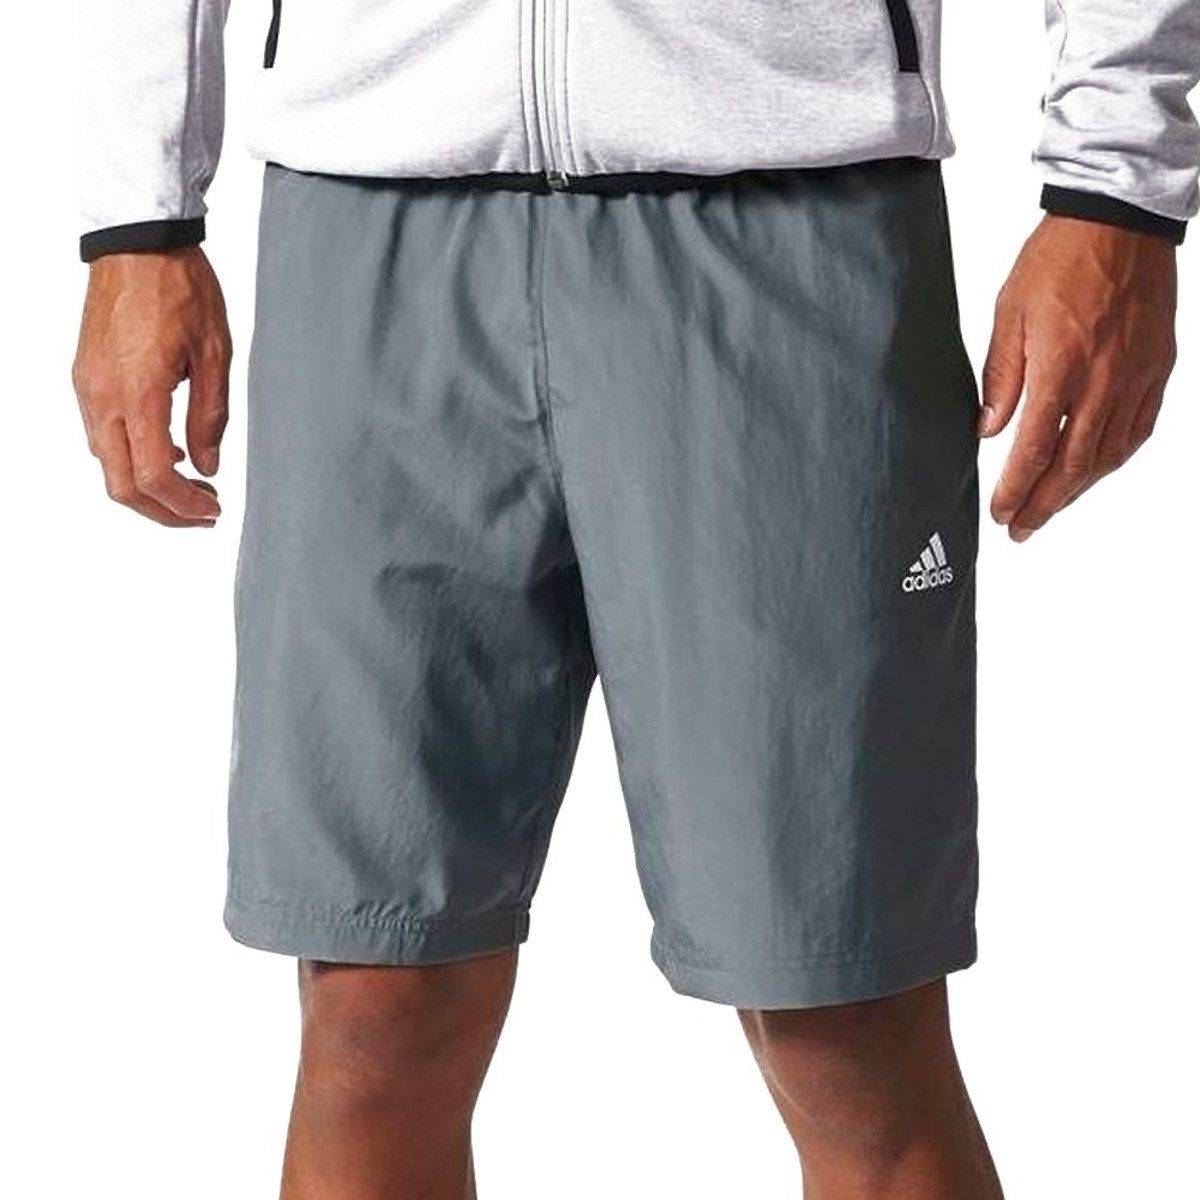 adidas Fab Men's Tennis Shorts S86769